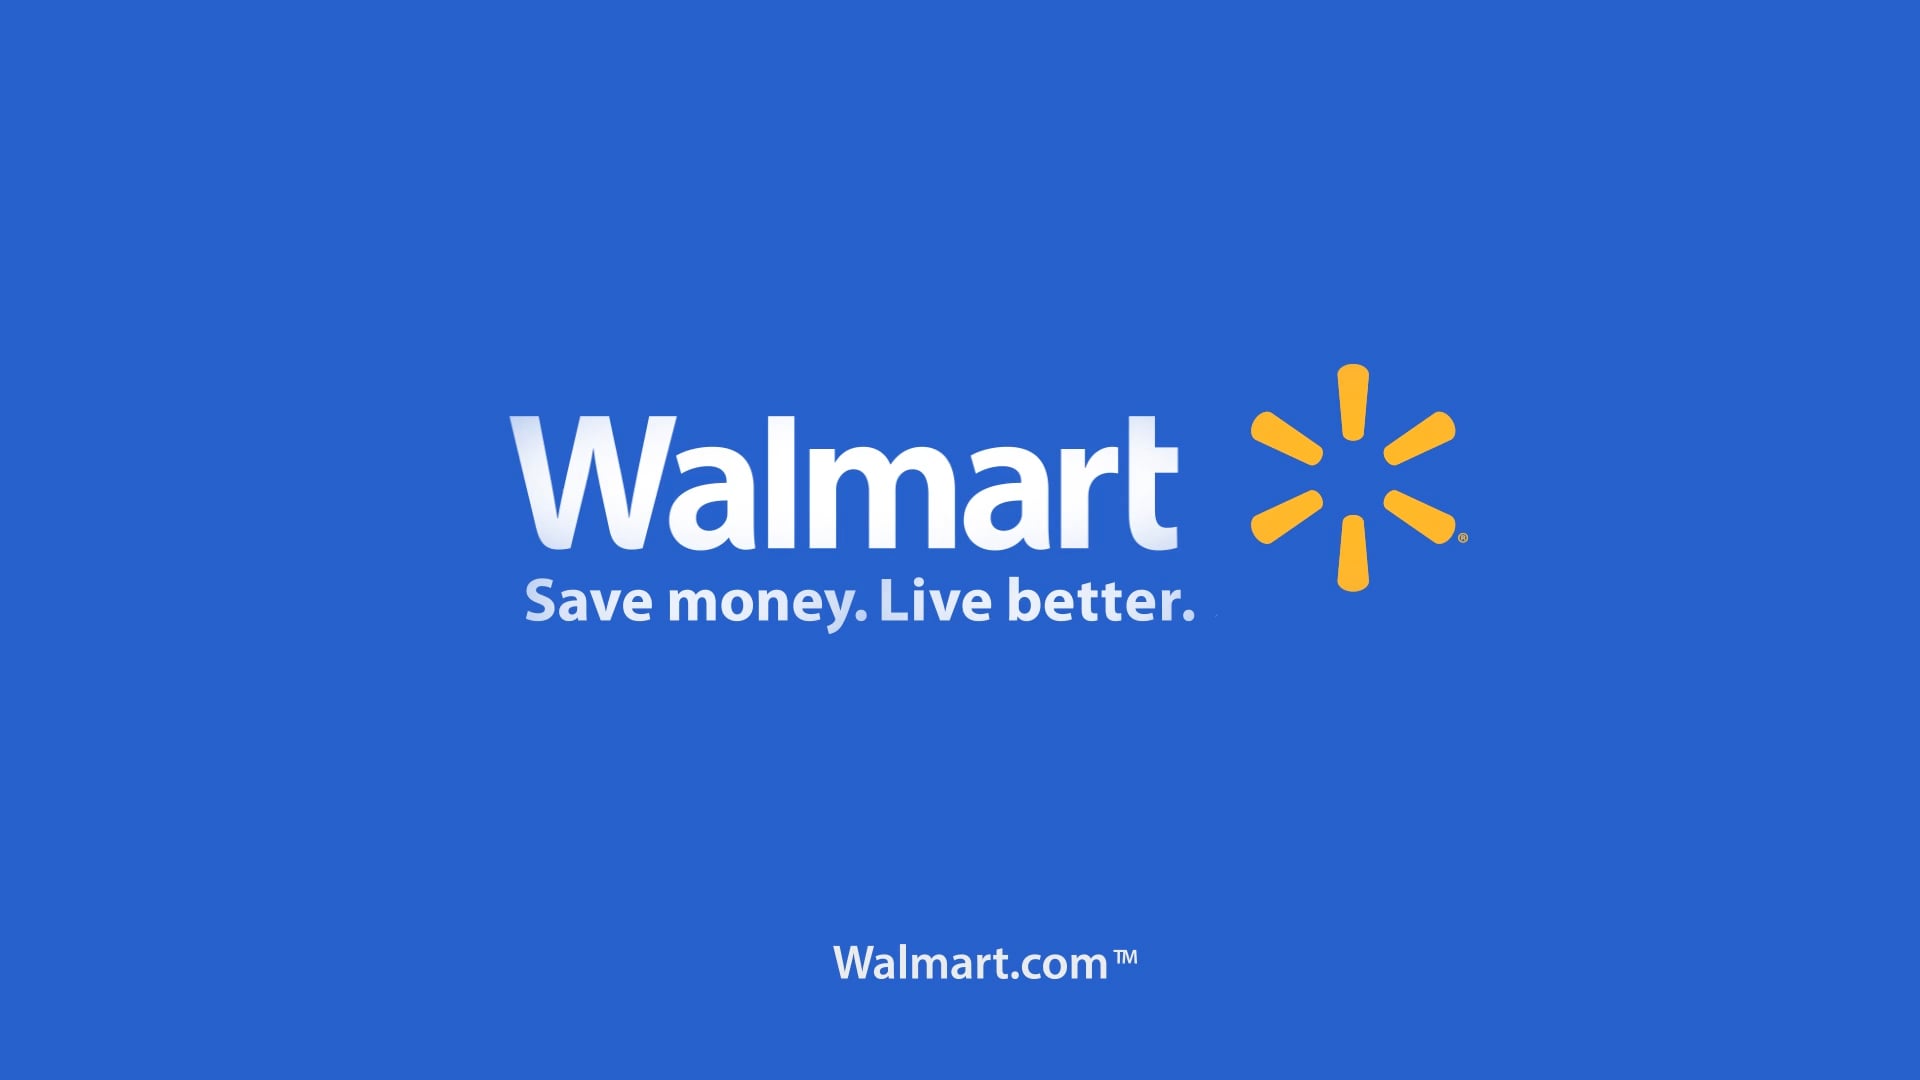 Walmart - How To Buy Frames Video Series